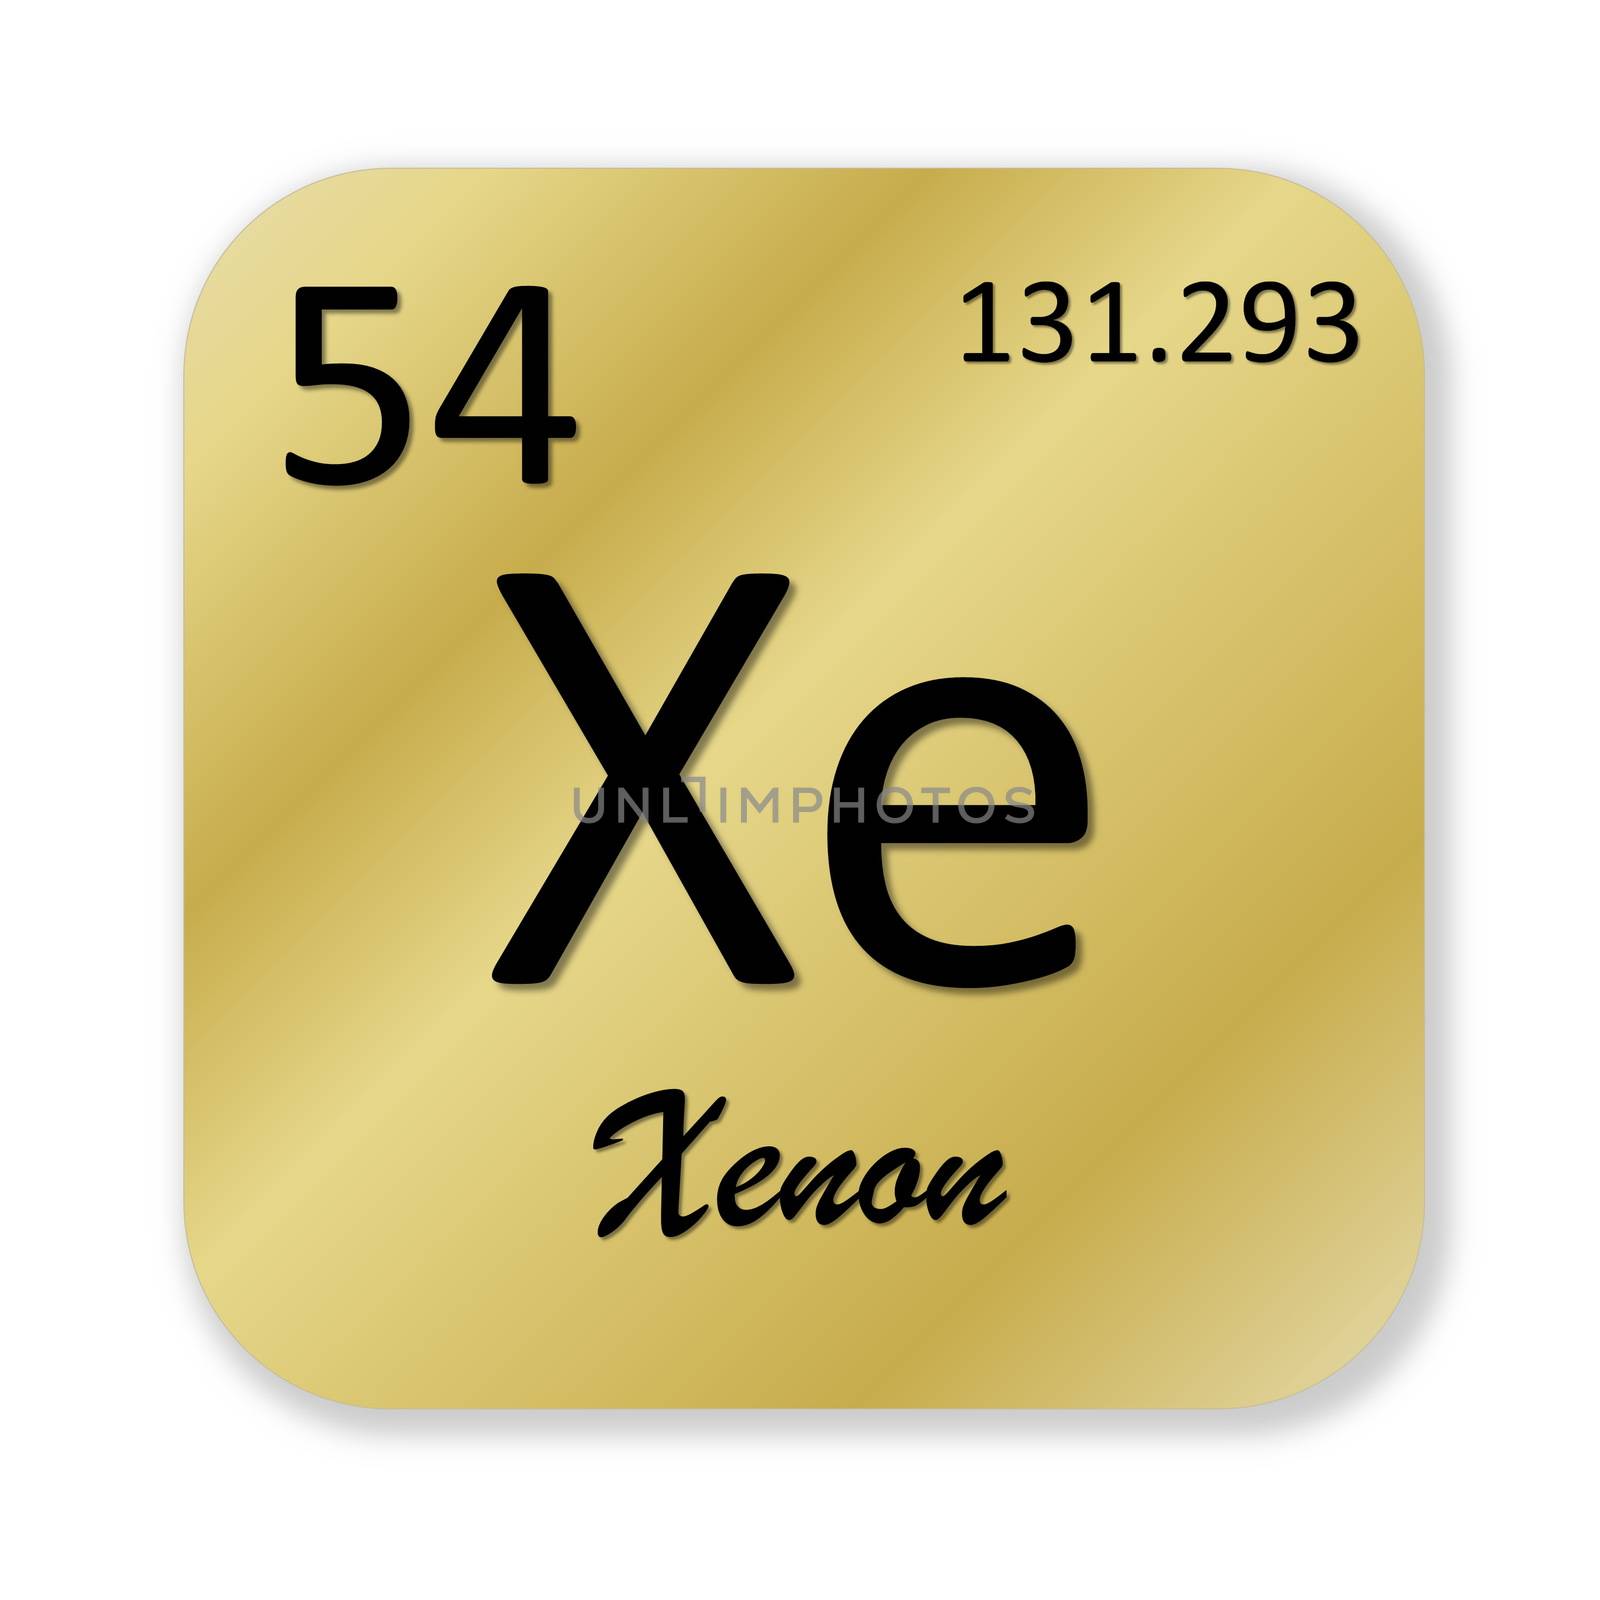 Xenon element by Elenaphotos21